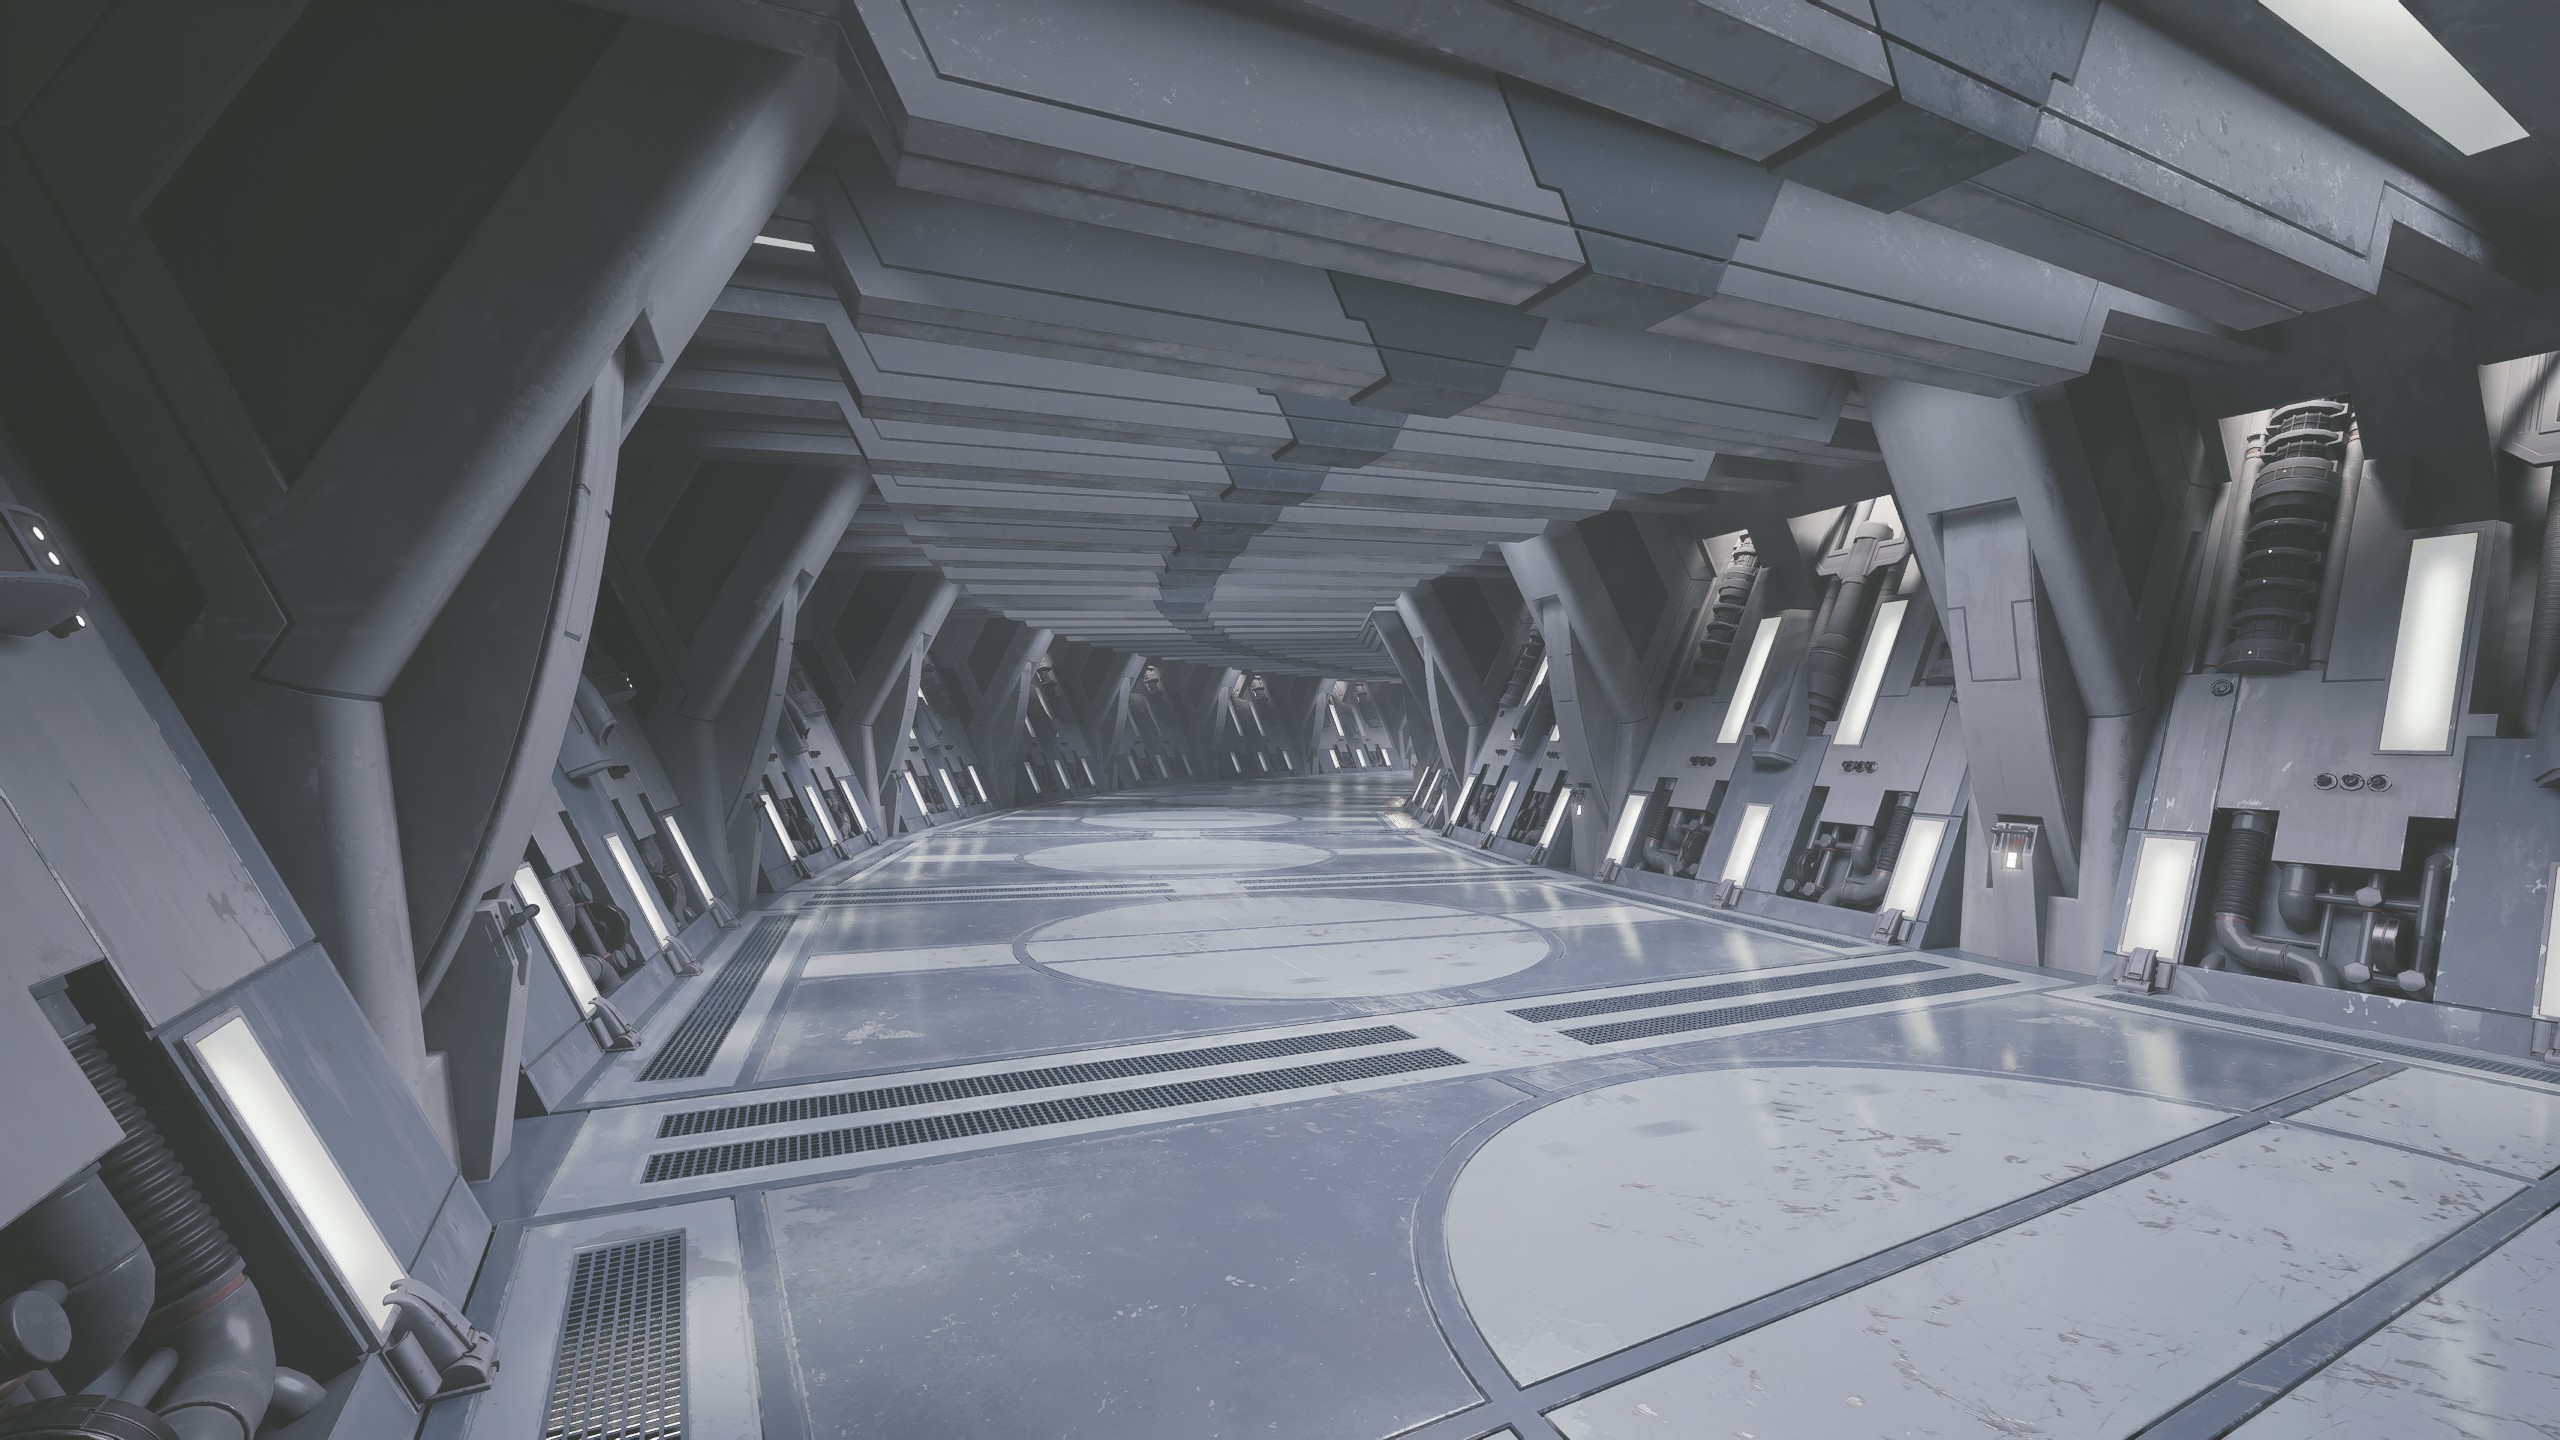 General 2560x1440 Star Wars Star Wars Jedi: Survivor hallway science fiction futuristic digital art futuristic construction video games interior video game art screen shot reflection CGI